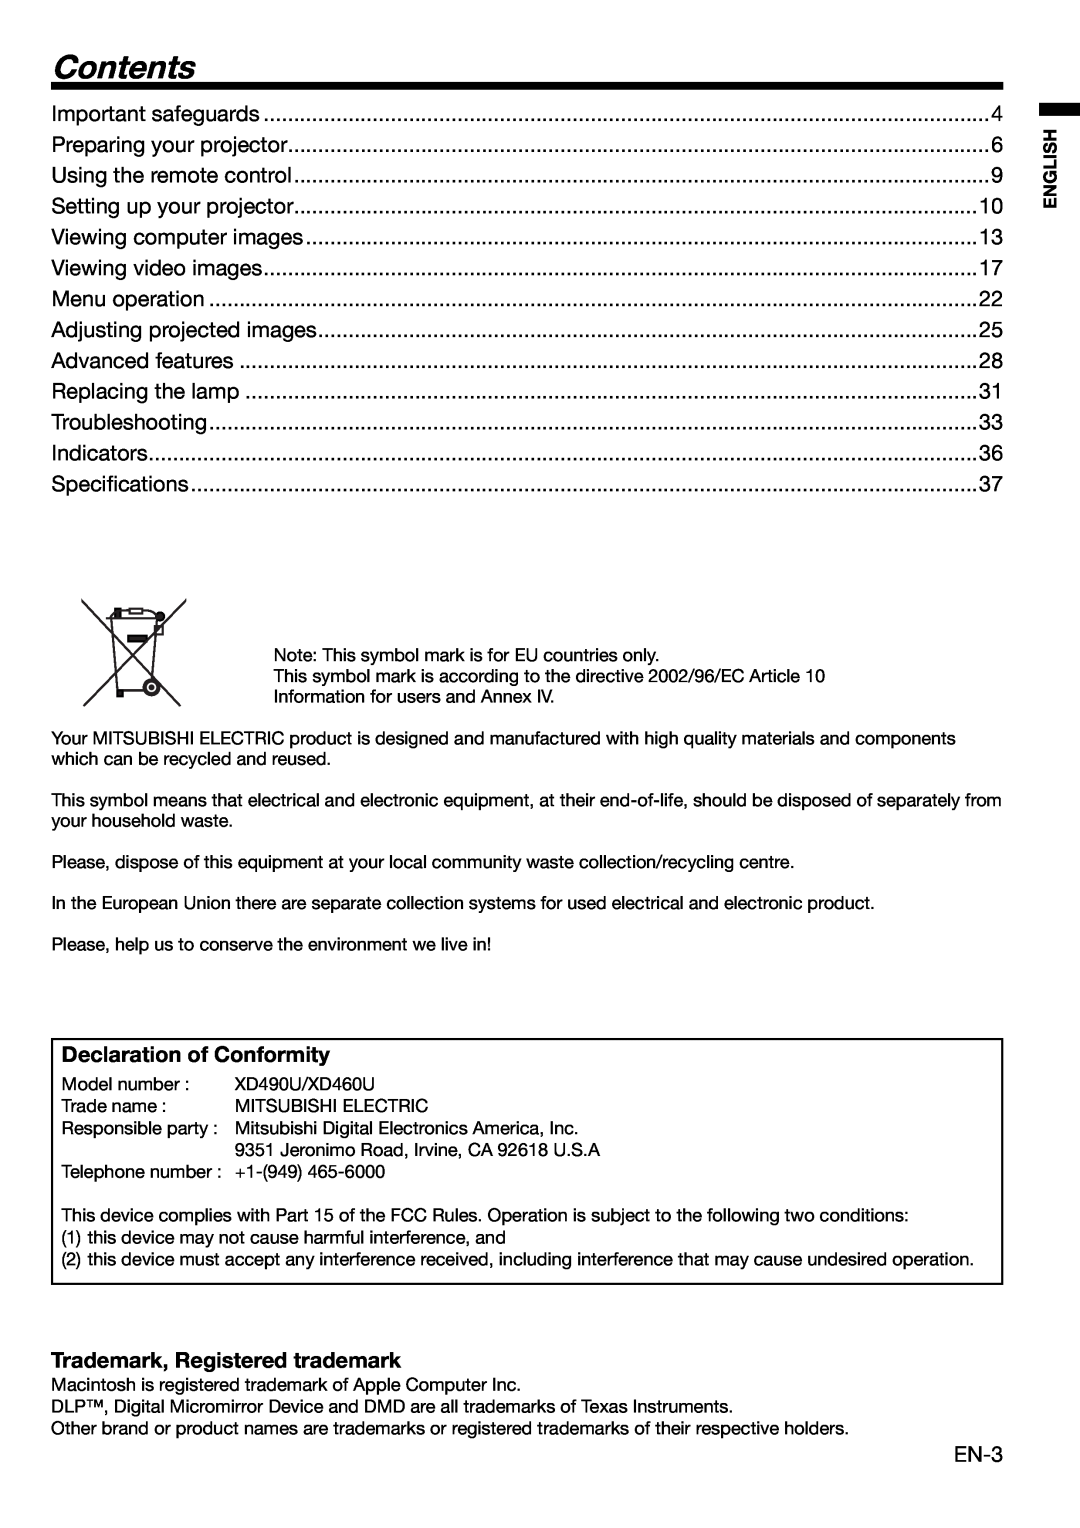 Mitsubishi Electronics XD460U user manual Contents, Declaration of Conformity, Trademark, Registered trademark 